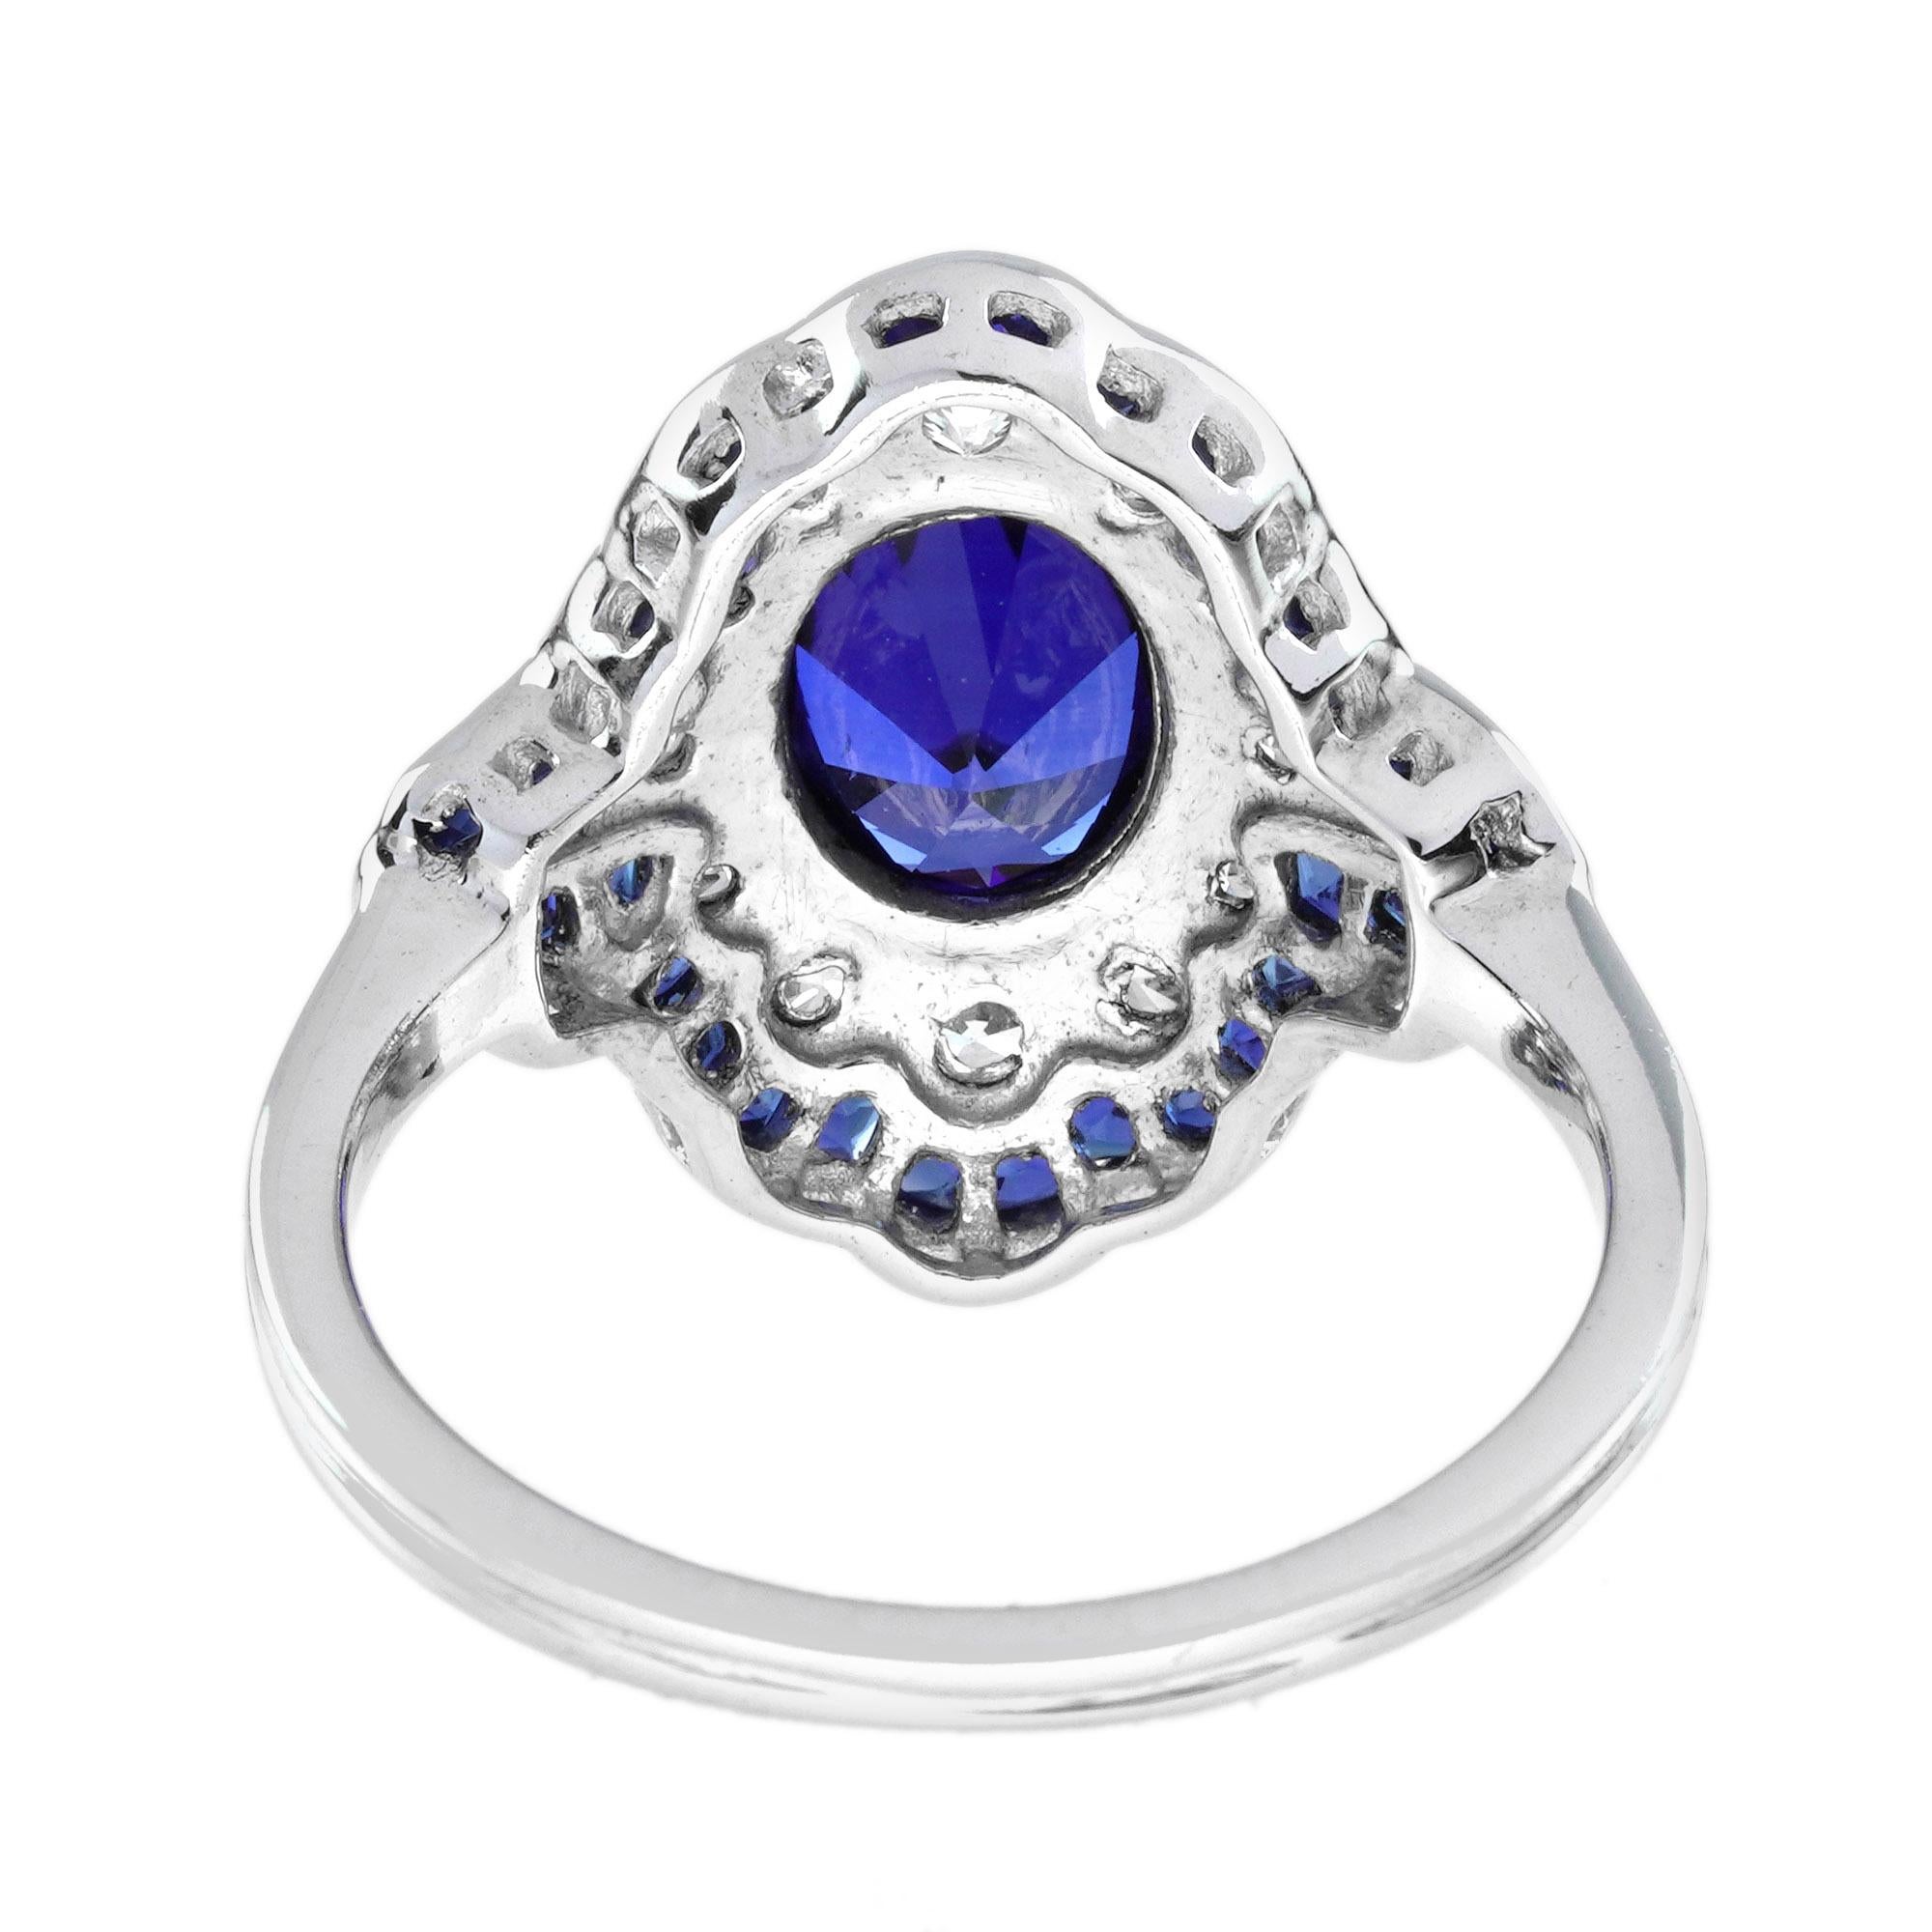 Women's 1.6 Ct. Ceylon Sapphire Diamond Art Deco Style Engagement Ring in 18K White Gold For Sale